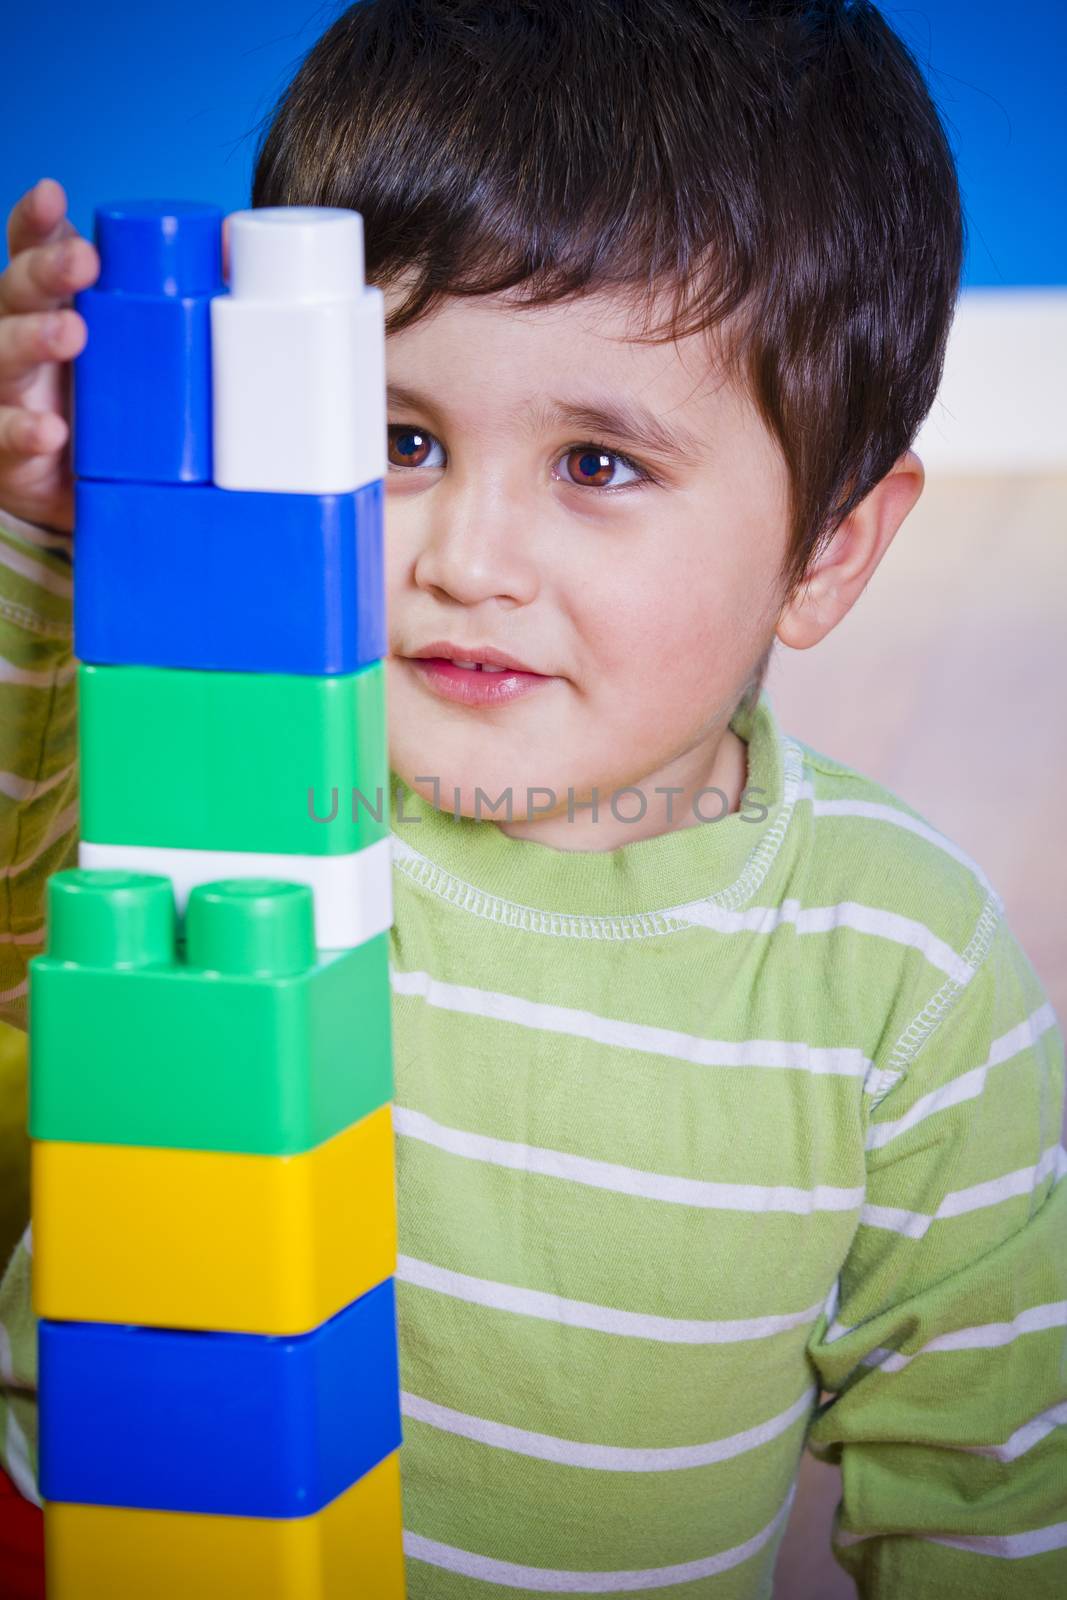 European boy playing with plastic colorful blocks by FernandoCortes